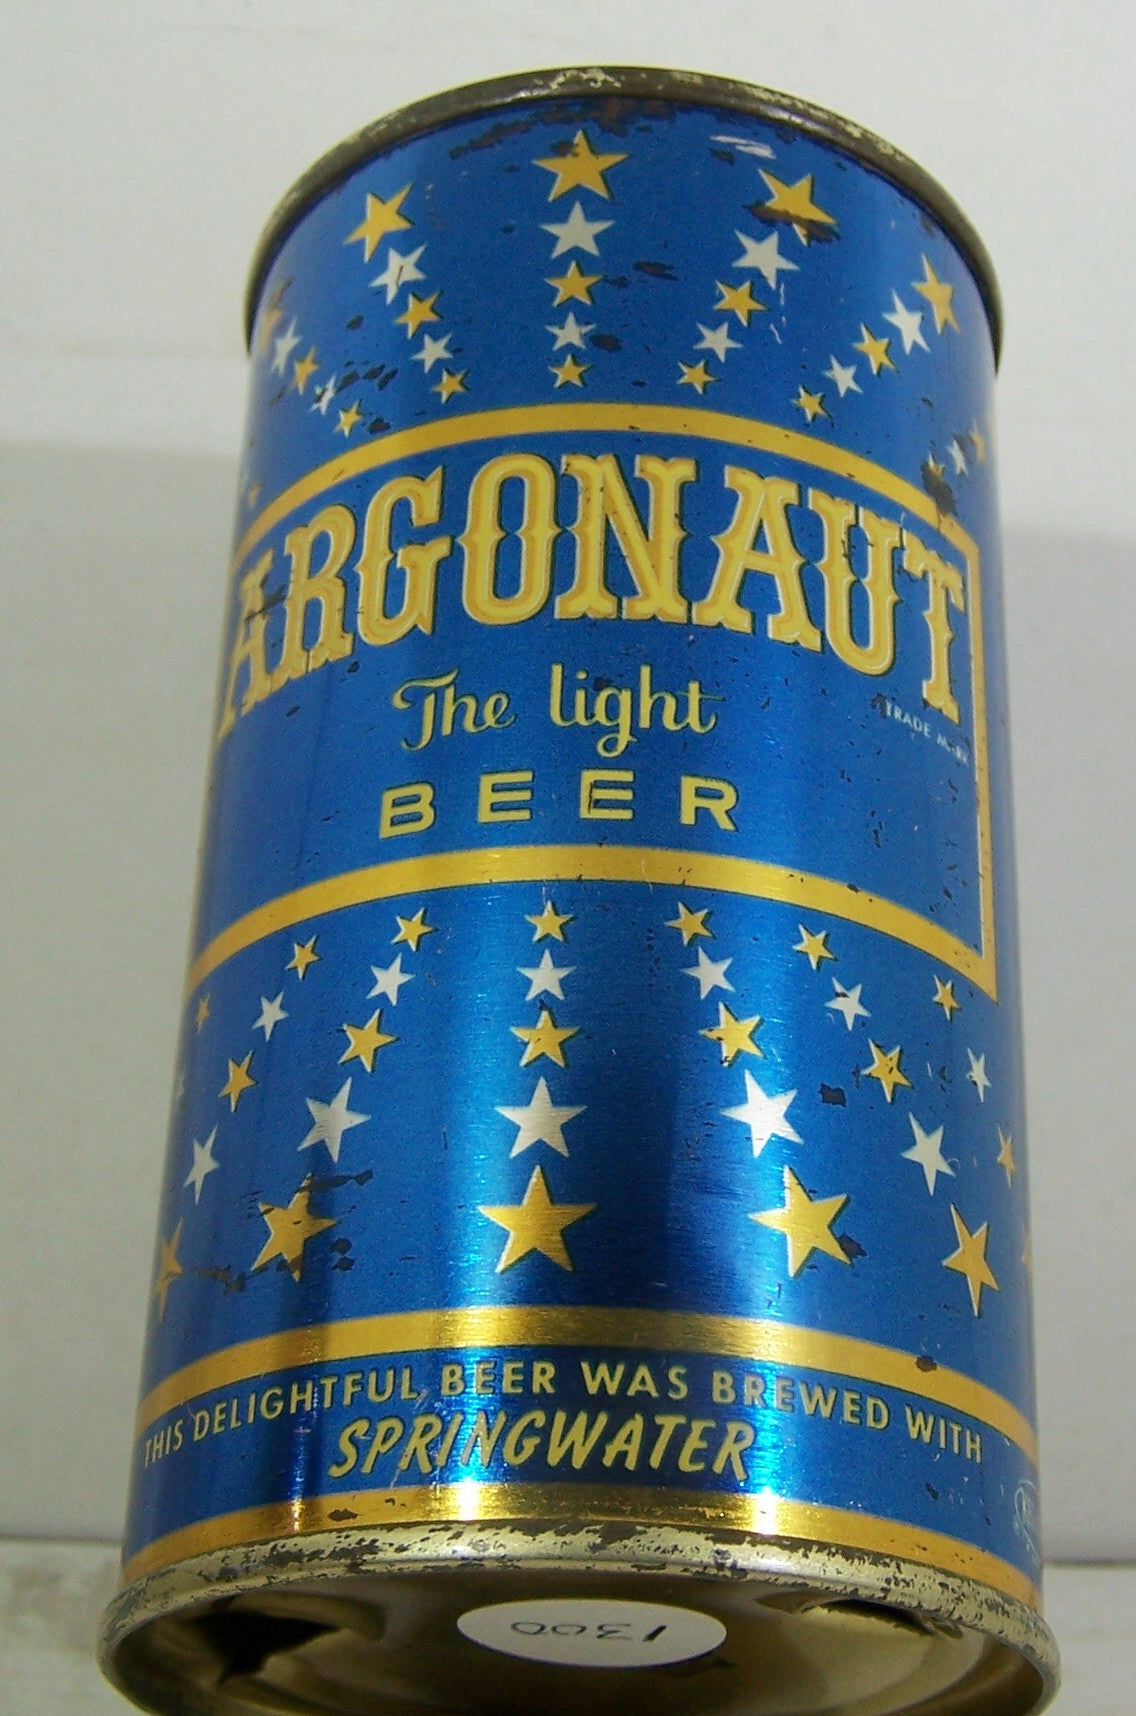 Argonaut The Light Beer, USBC 31-36, Grade 1/1- Sold 1/28/15